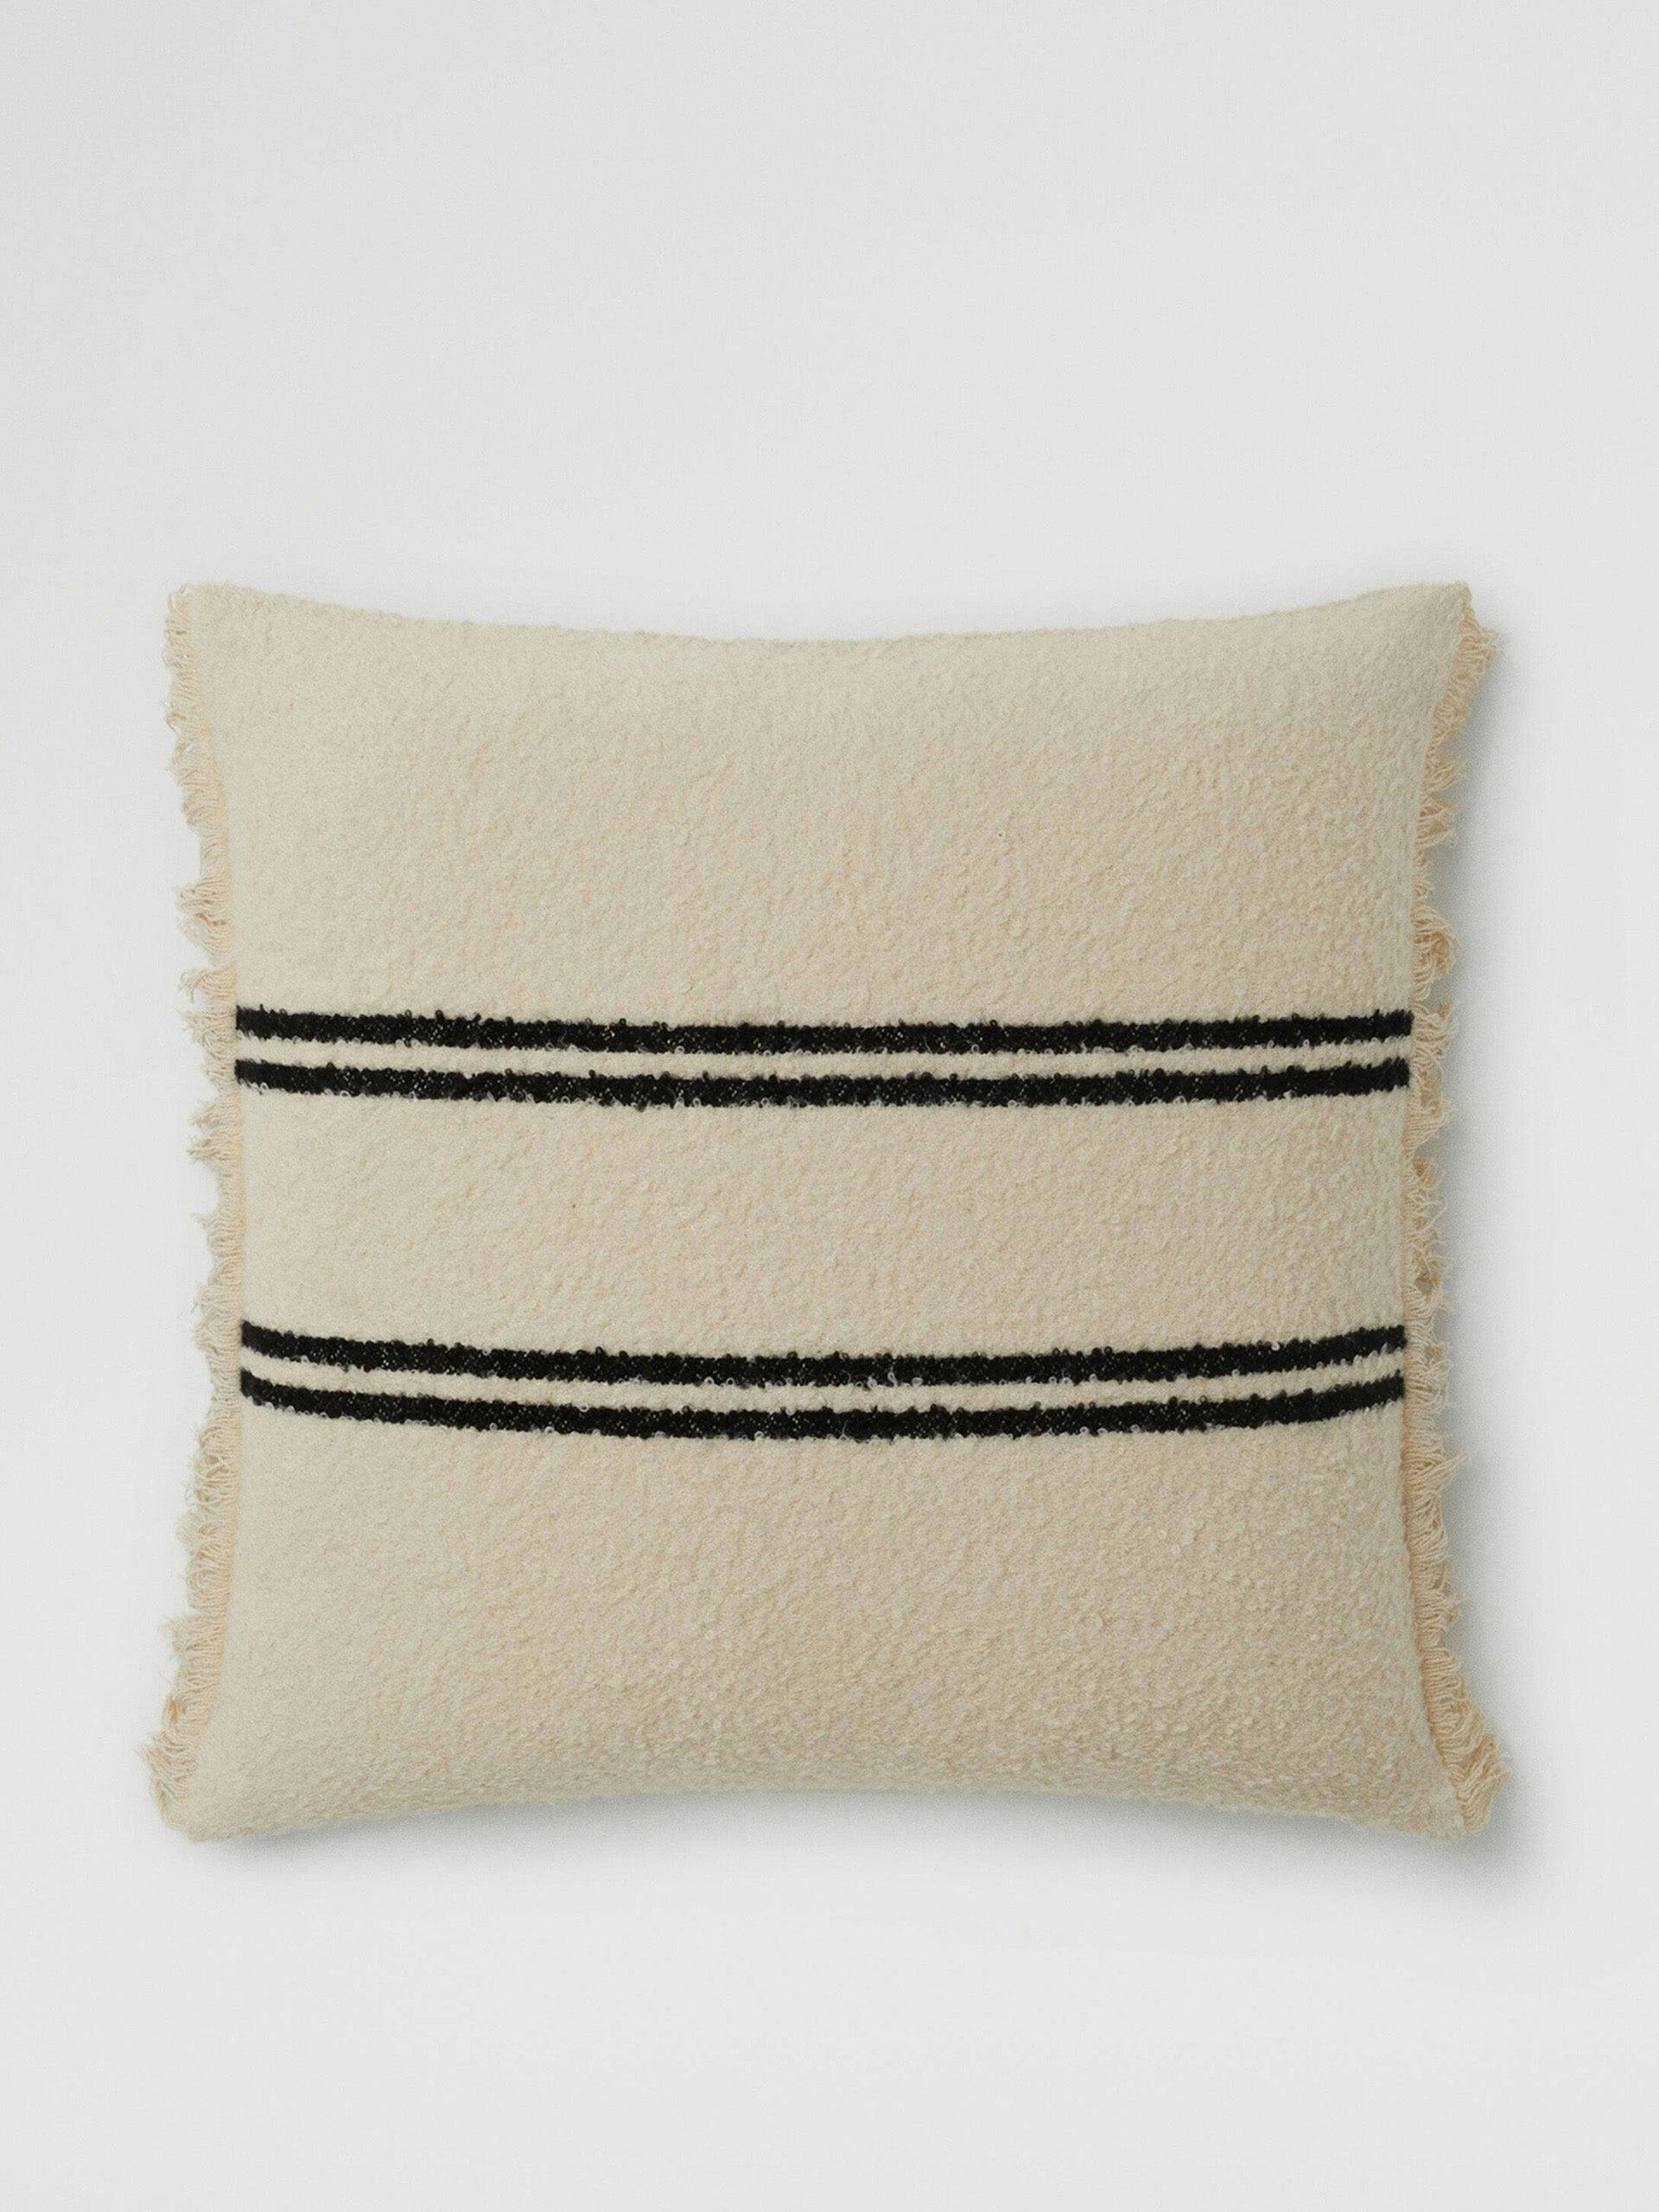 Cream and black striped cushion cover